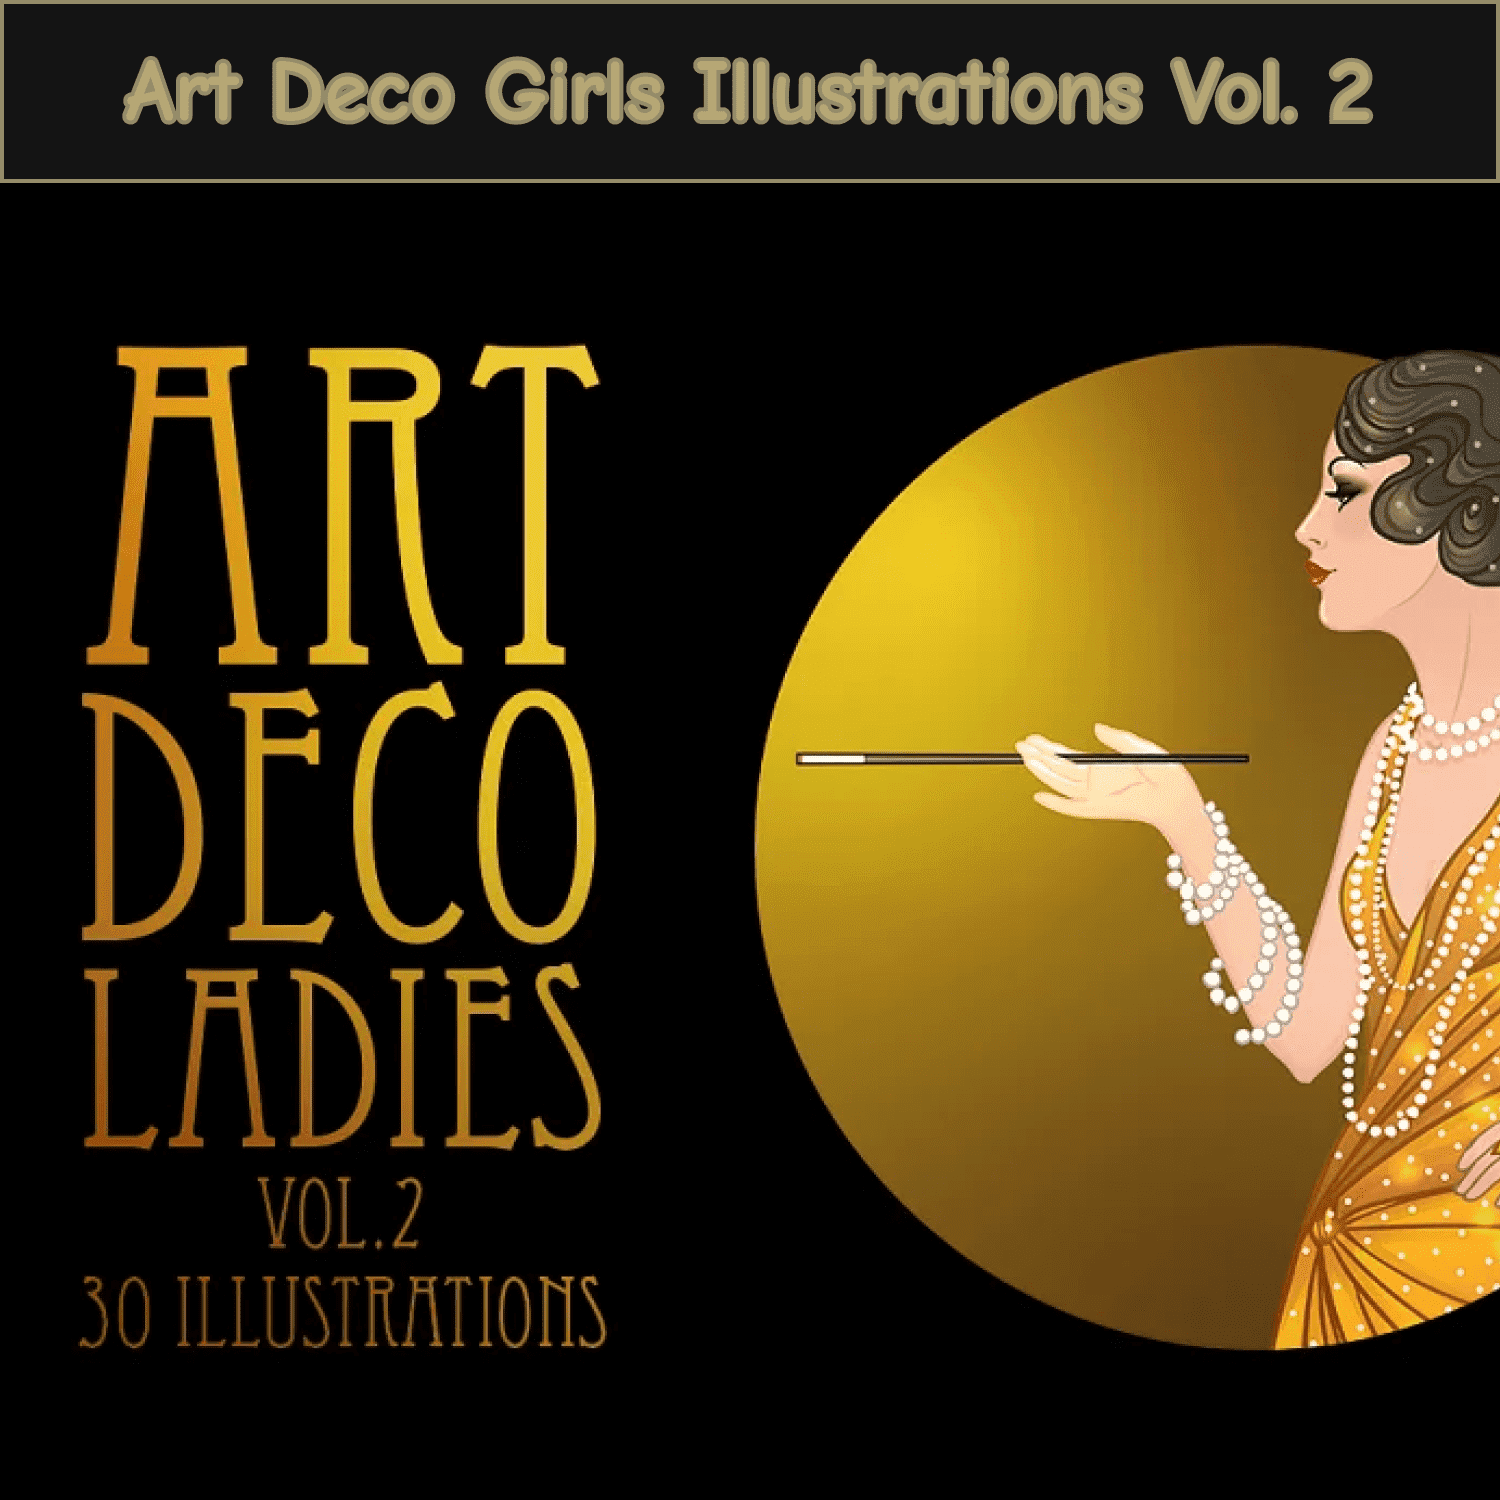 Art Deco Girls Illustrations Vol. 2 cover image.